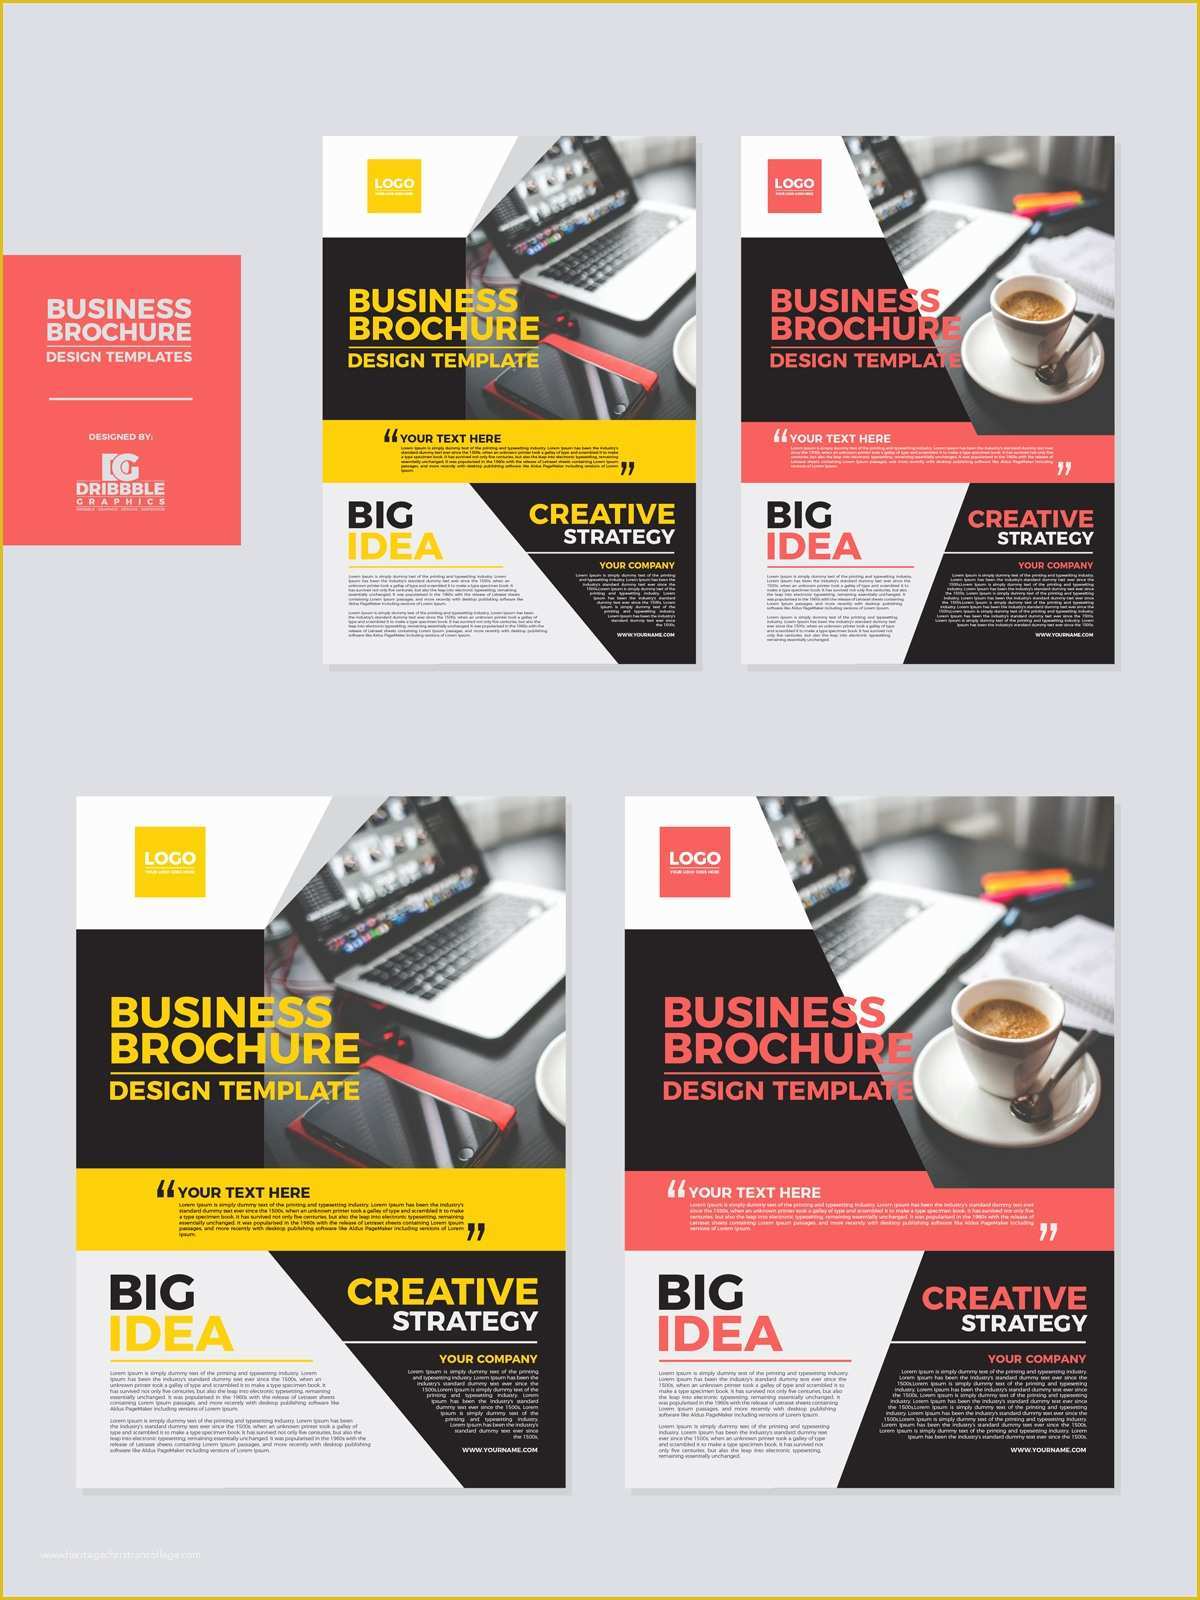 Free Online Mailer Design Templates Of Free Business Brochure Design Templates